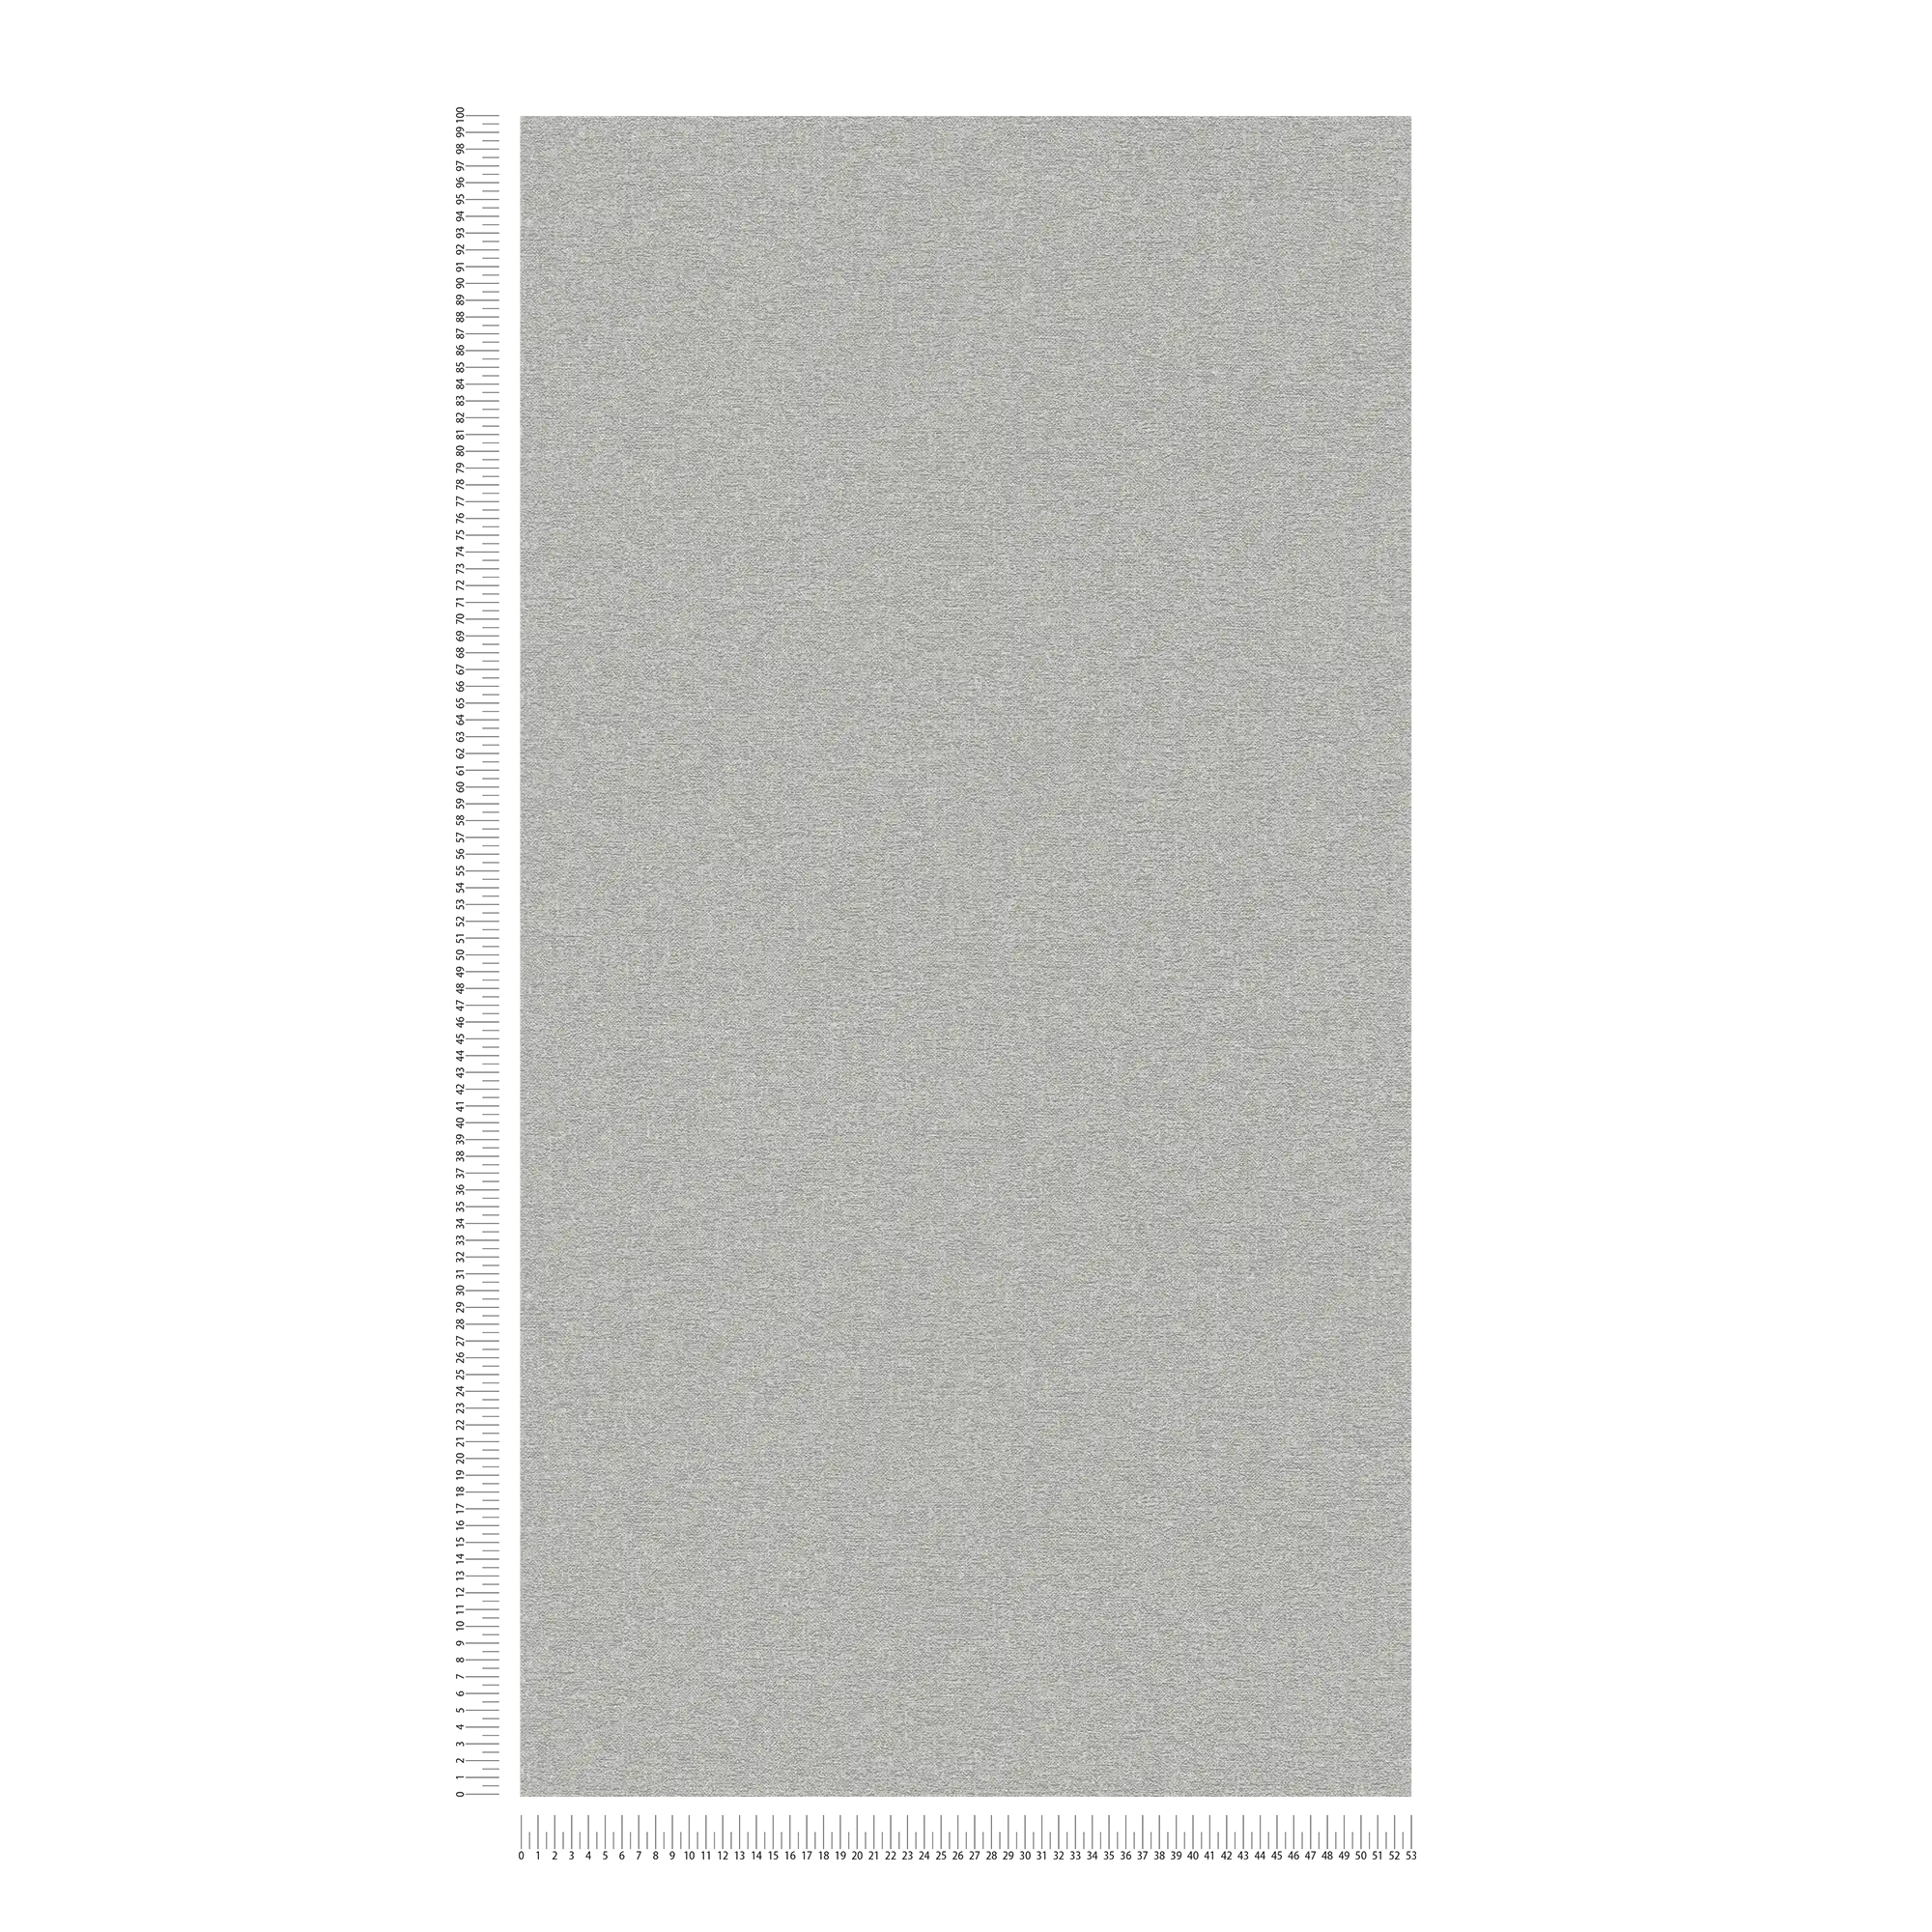             Carta da parati in tessuto non tessuto a tinta unita con motivo a trama leggera - grigio
        